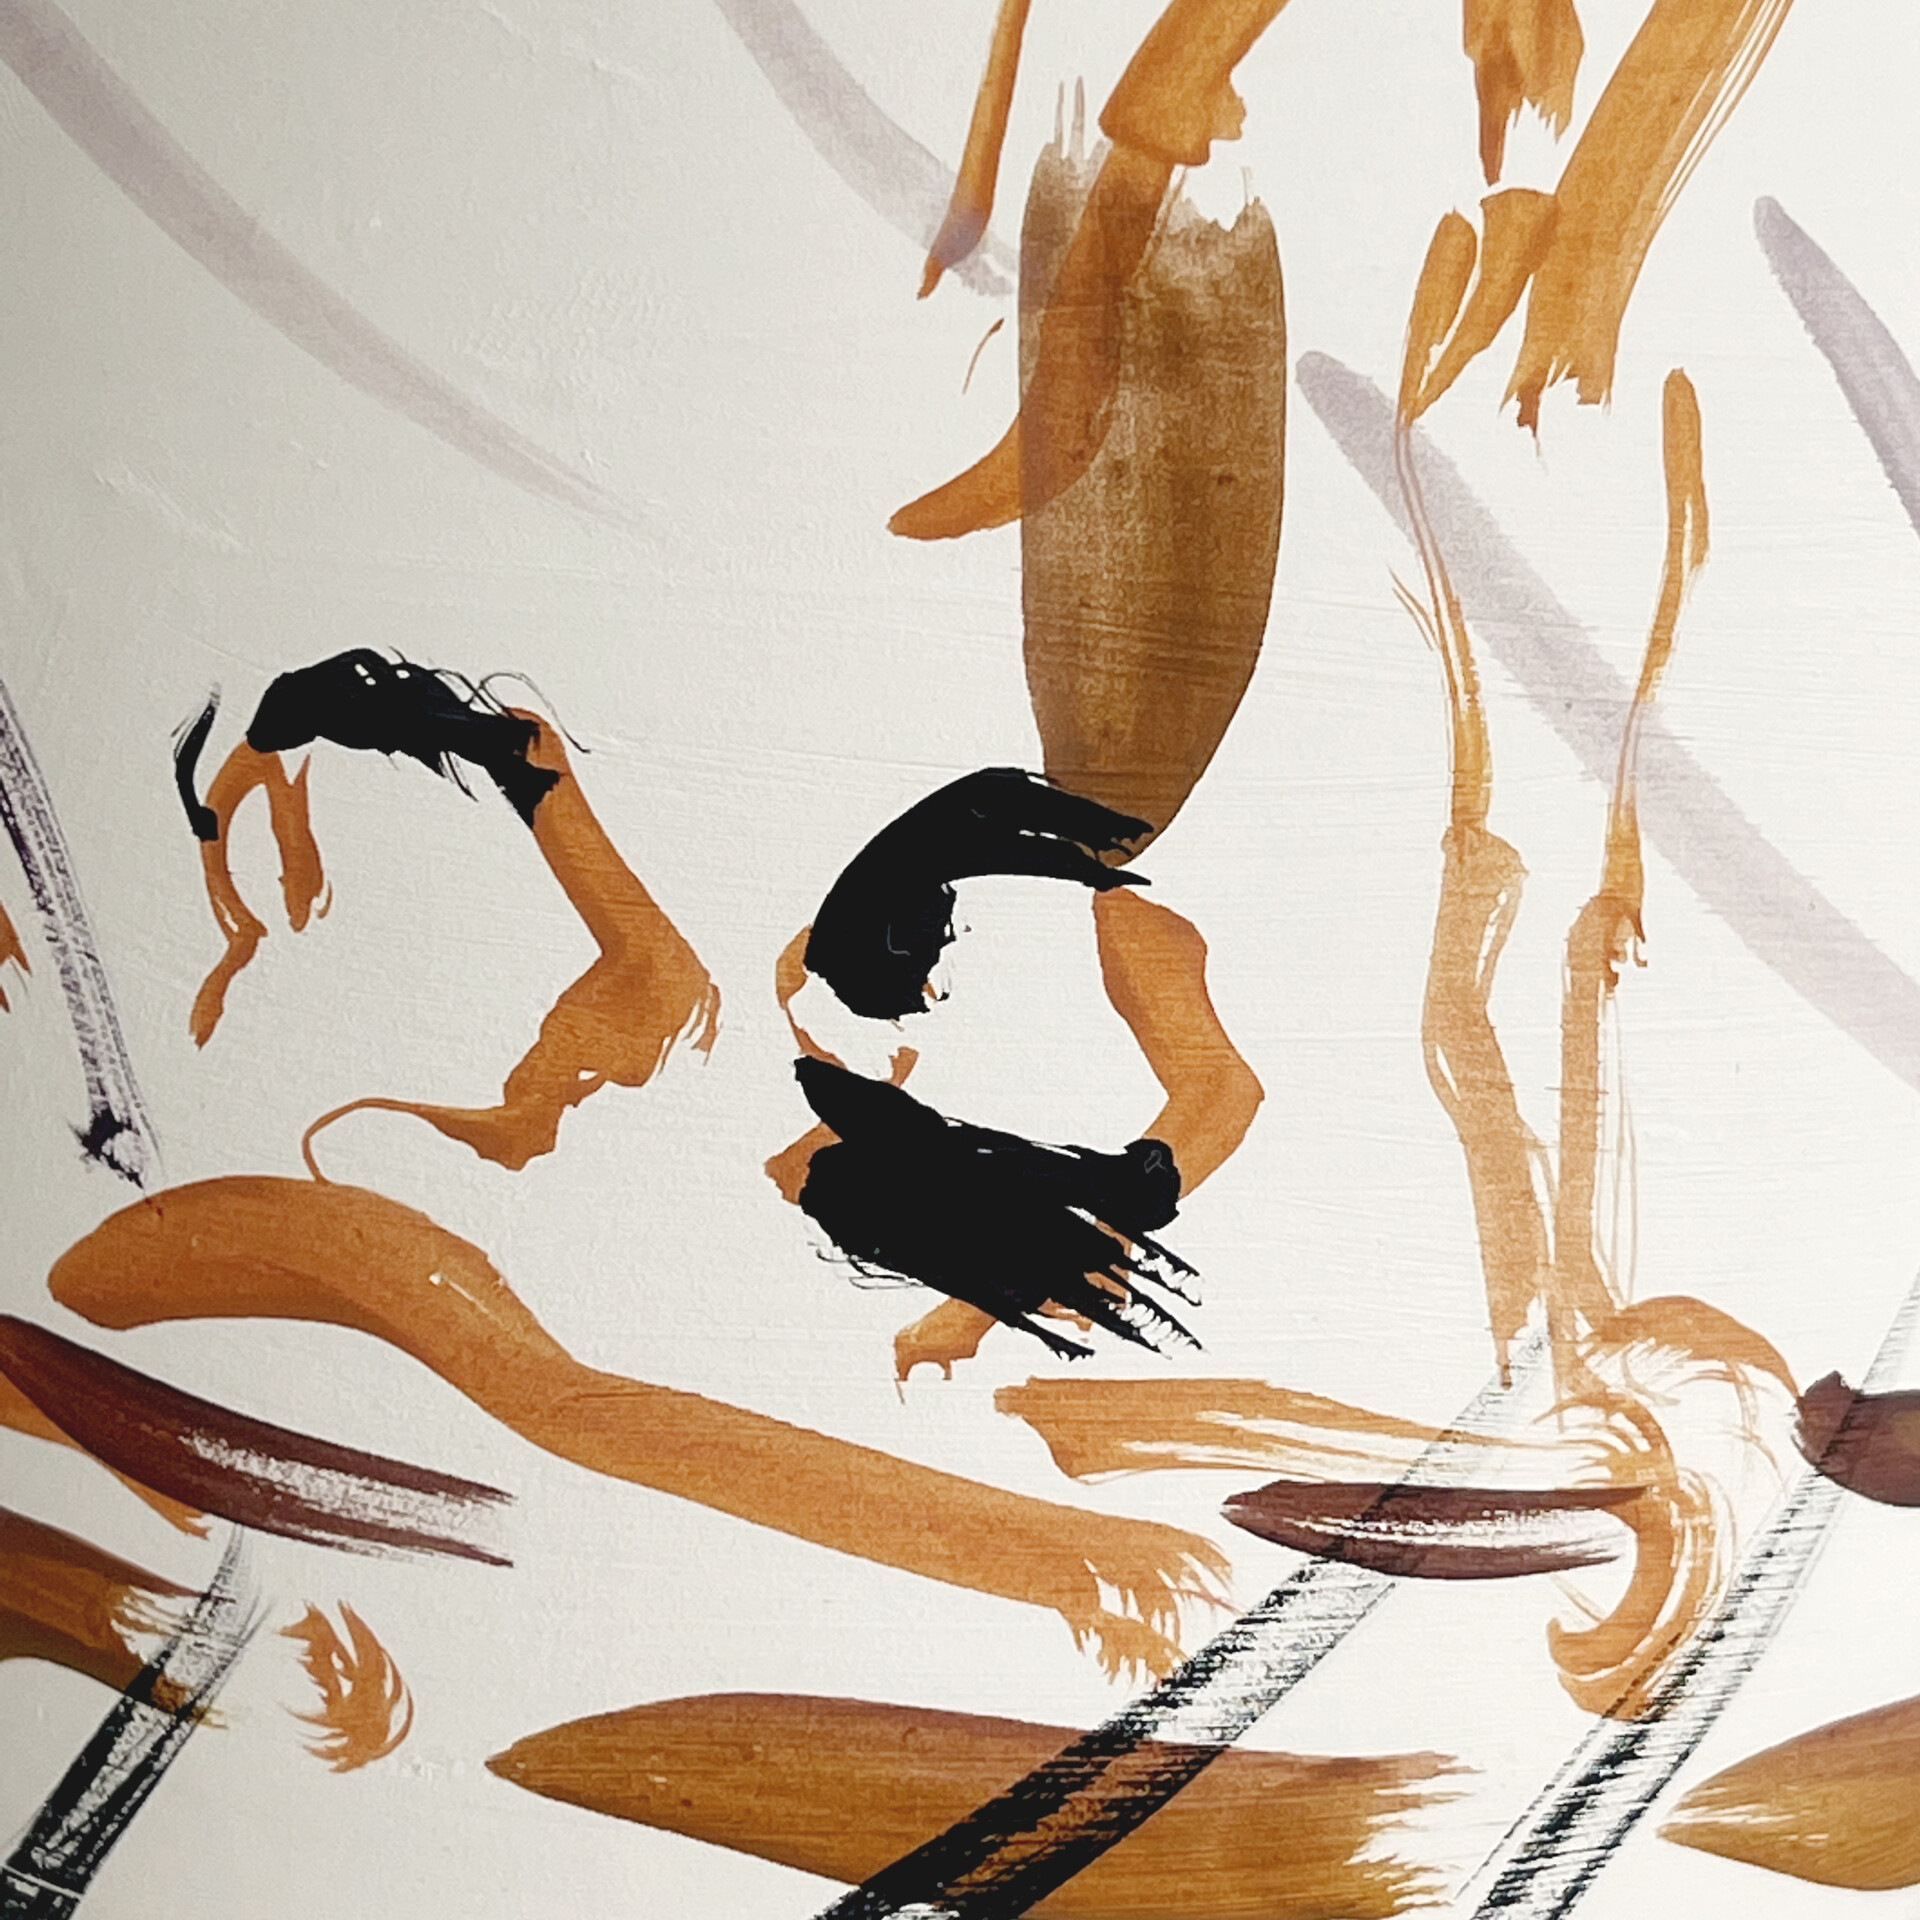 “Odysseus and Sirens”, 2021, oil paint on ceramics, 19,5 x 18, 5 cm